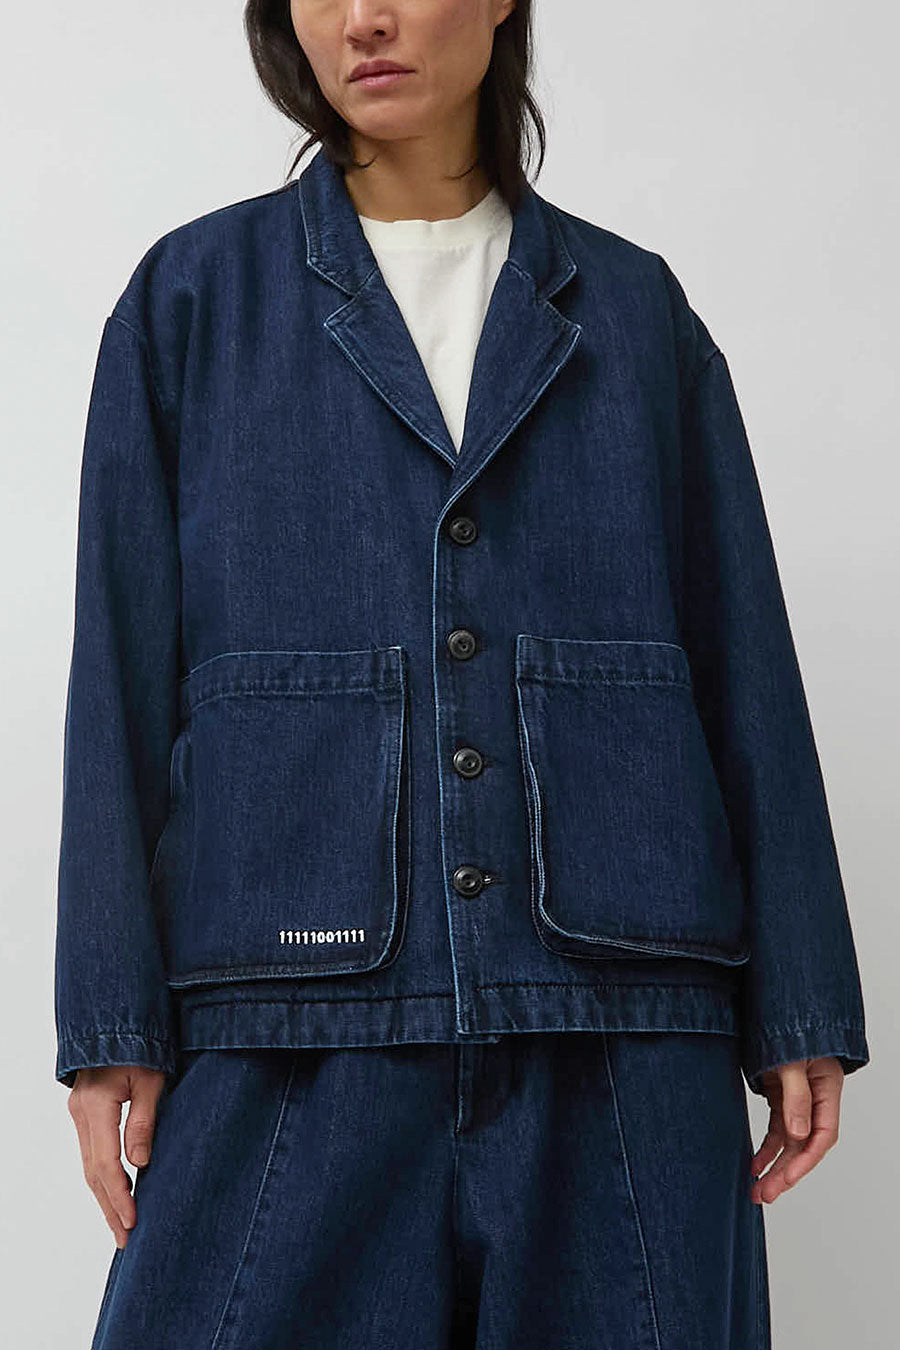 Société Anonyme Kensington Jacket in Blue Stone